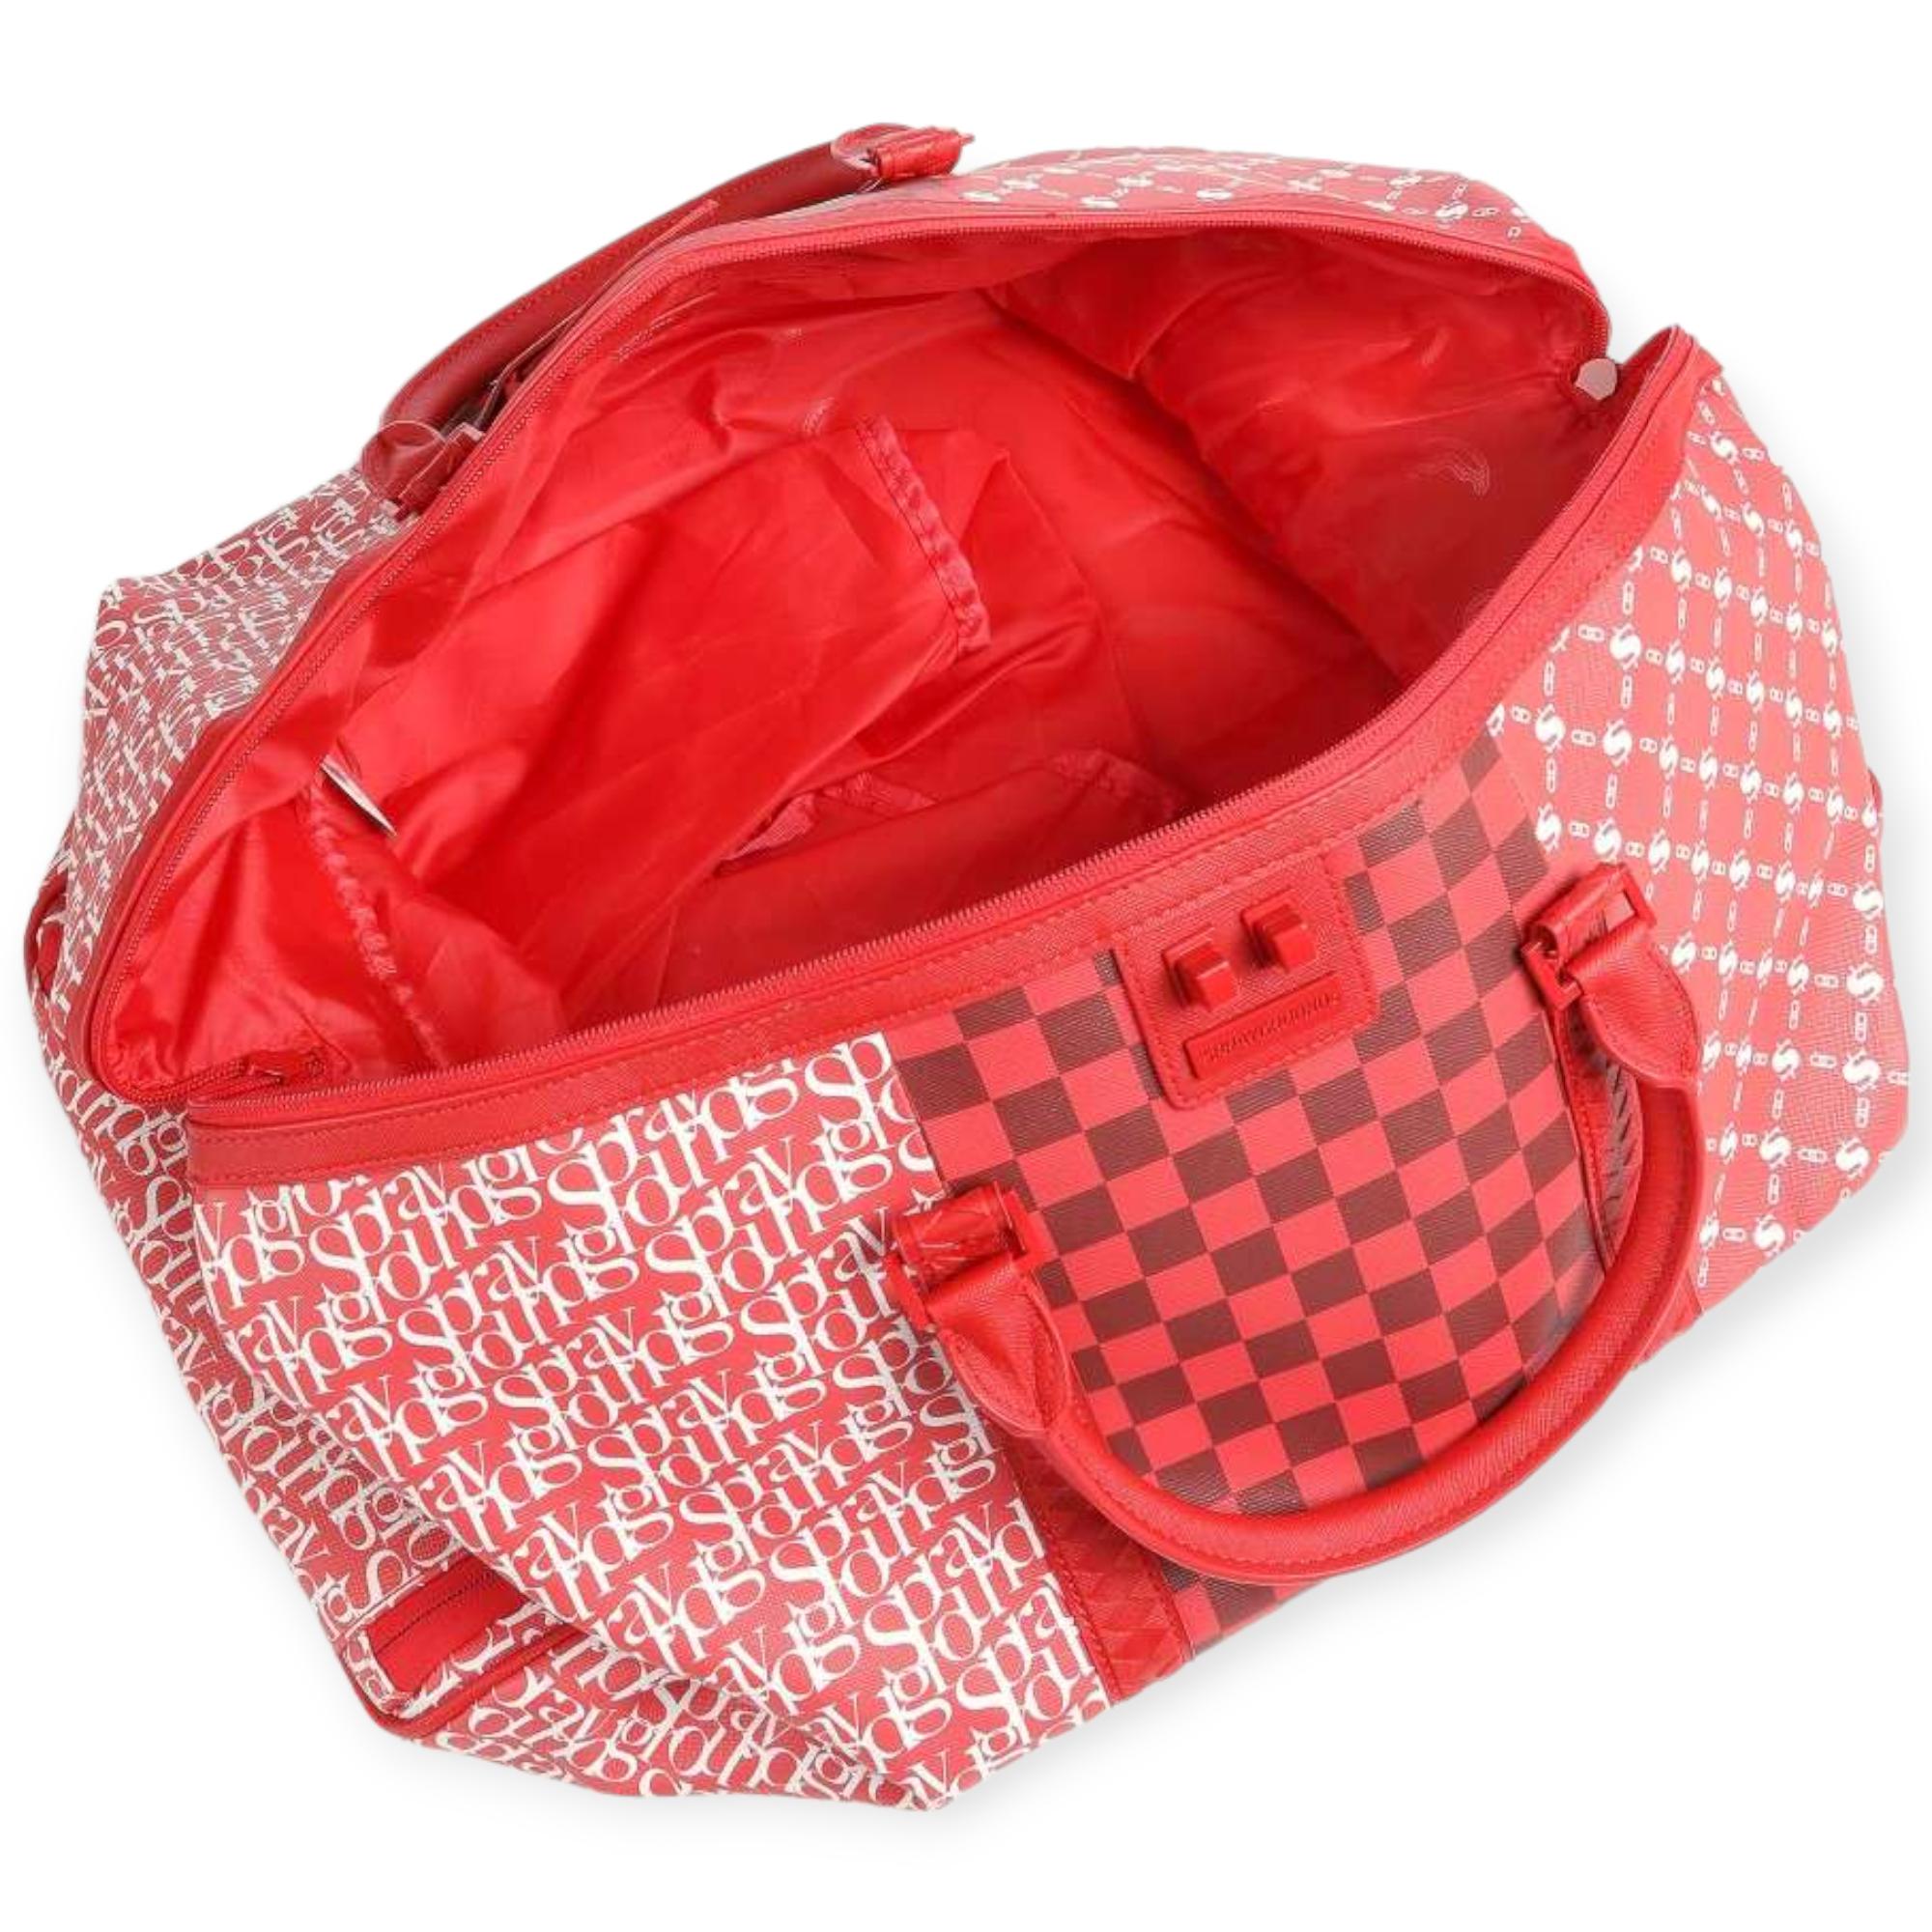 SprayGround Men Tri Split Red Duffle Bag (Red)